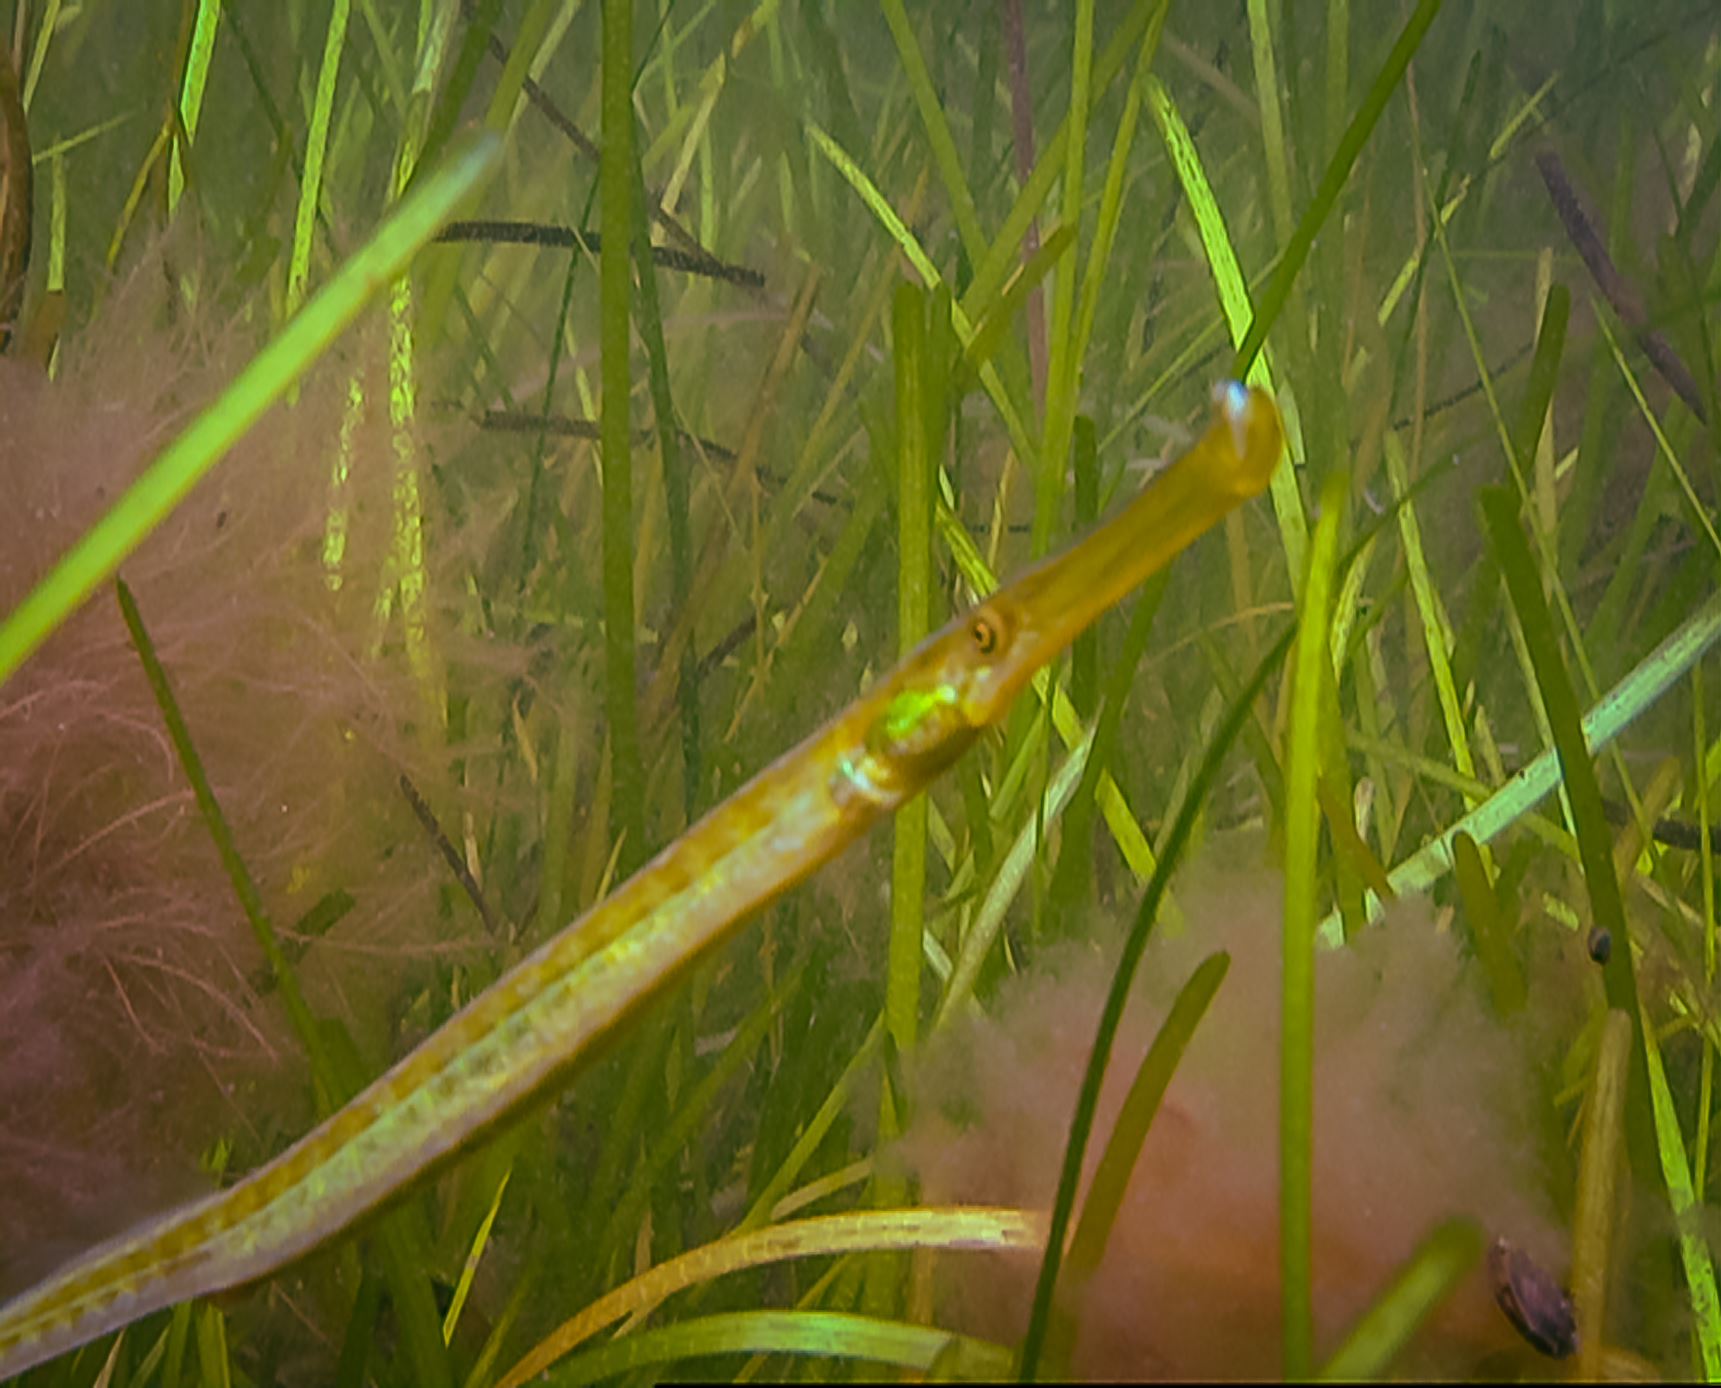 A slender fish hides in underwater vegetation.